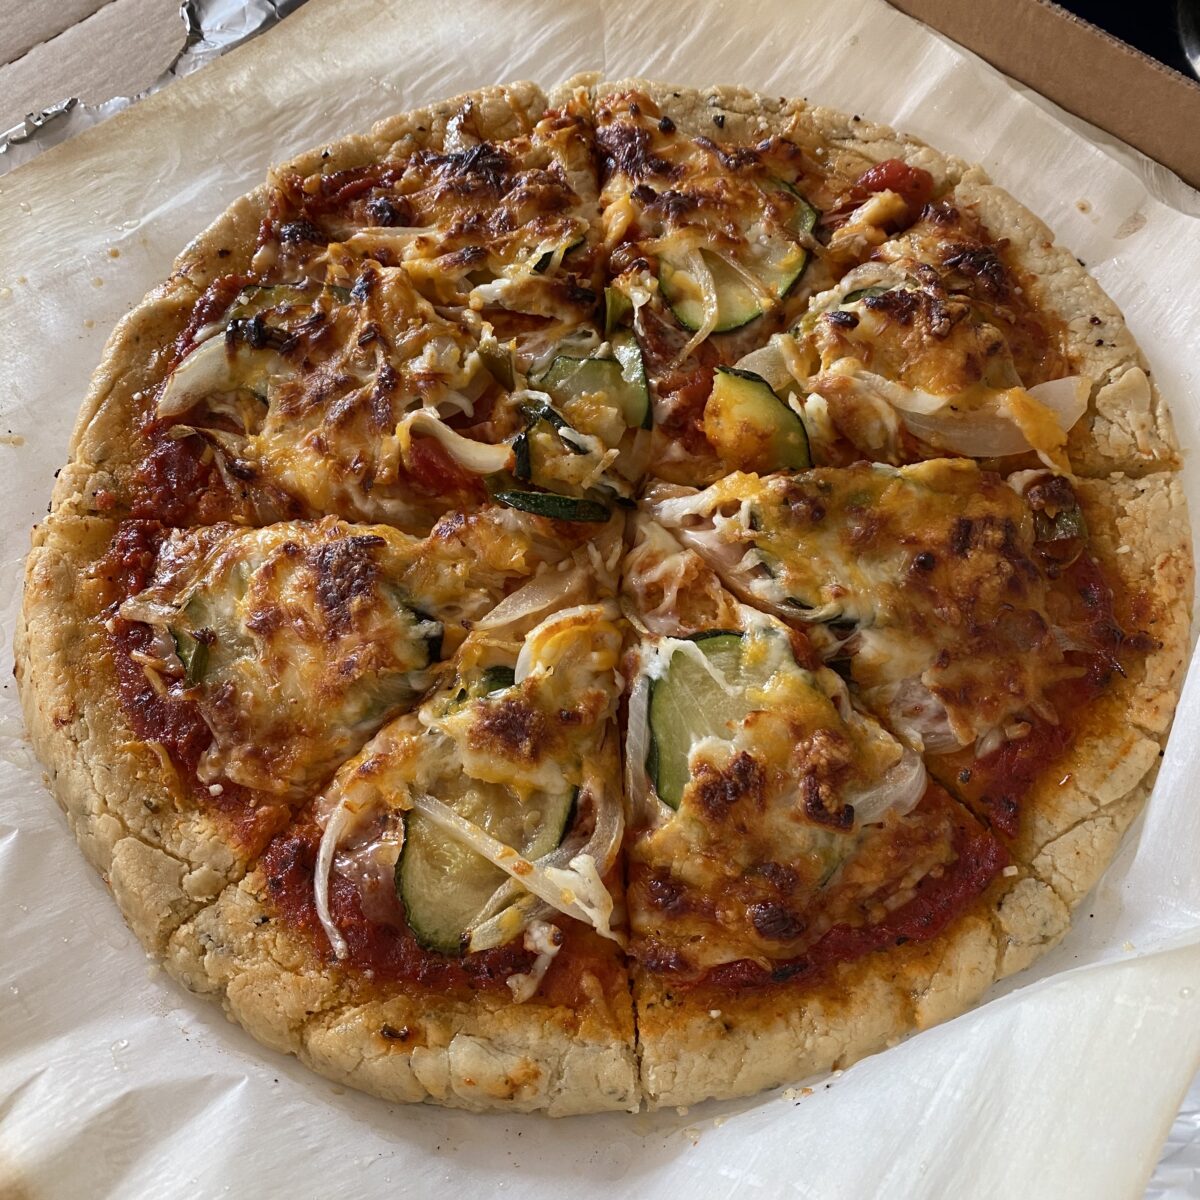 McGeeza's Gluten-Free Original Veggie Pizza Sliced into 8 Pieces of Pizza Pie